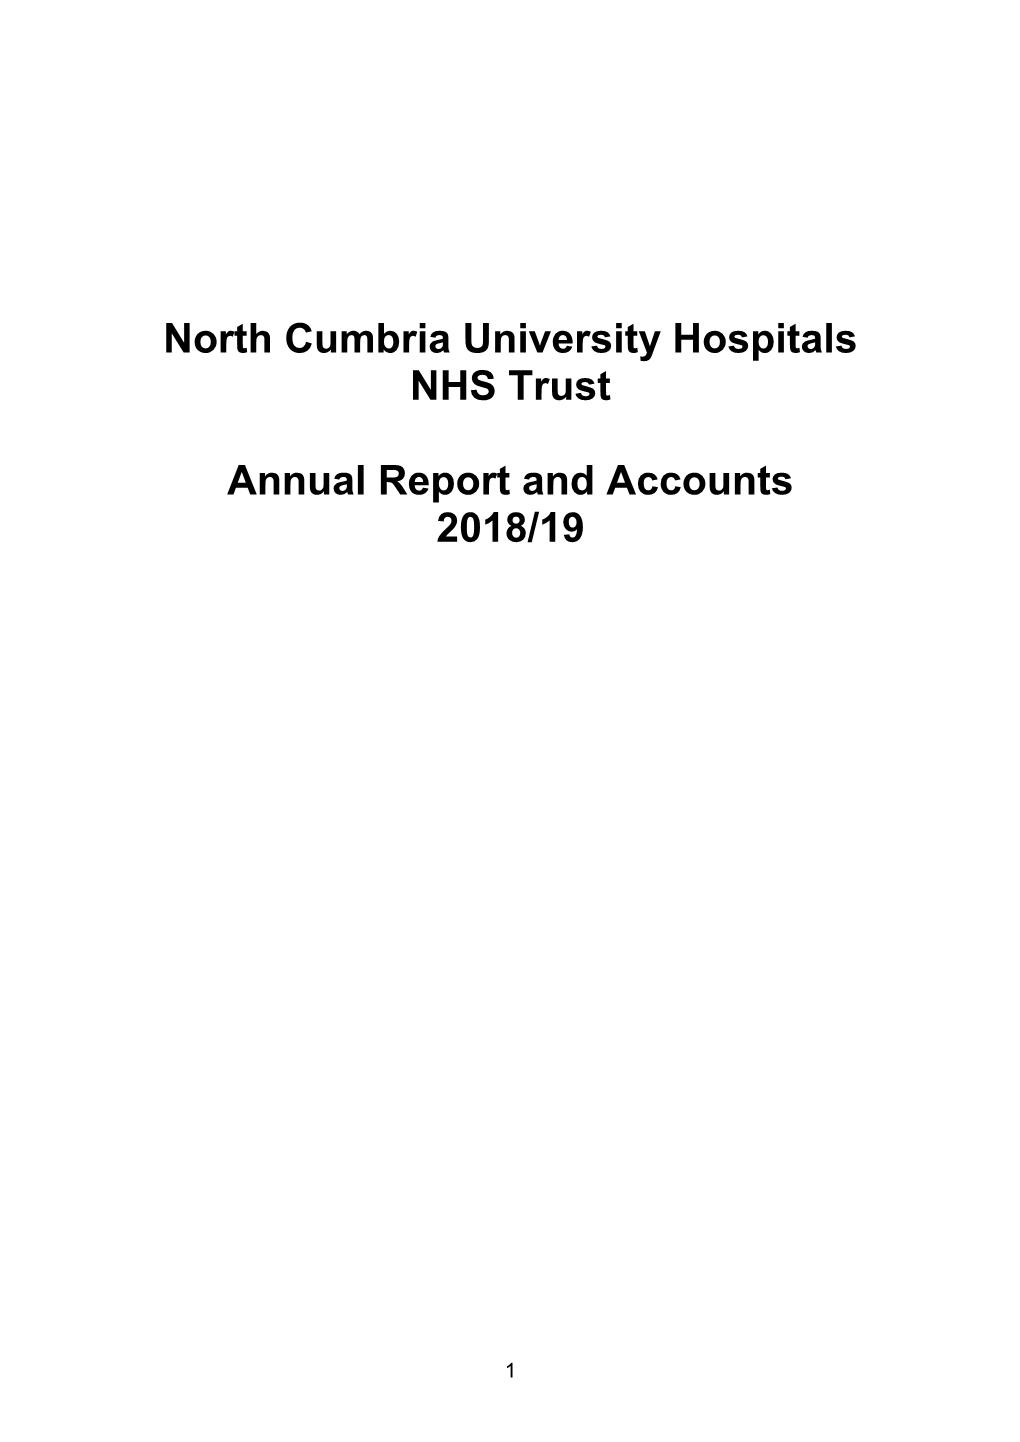 North Cumbria University Hospitals NHS Trust Annual